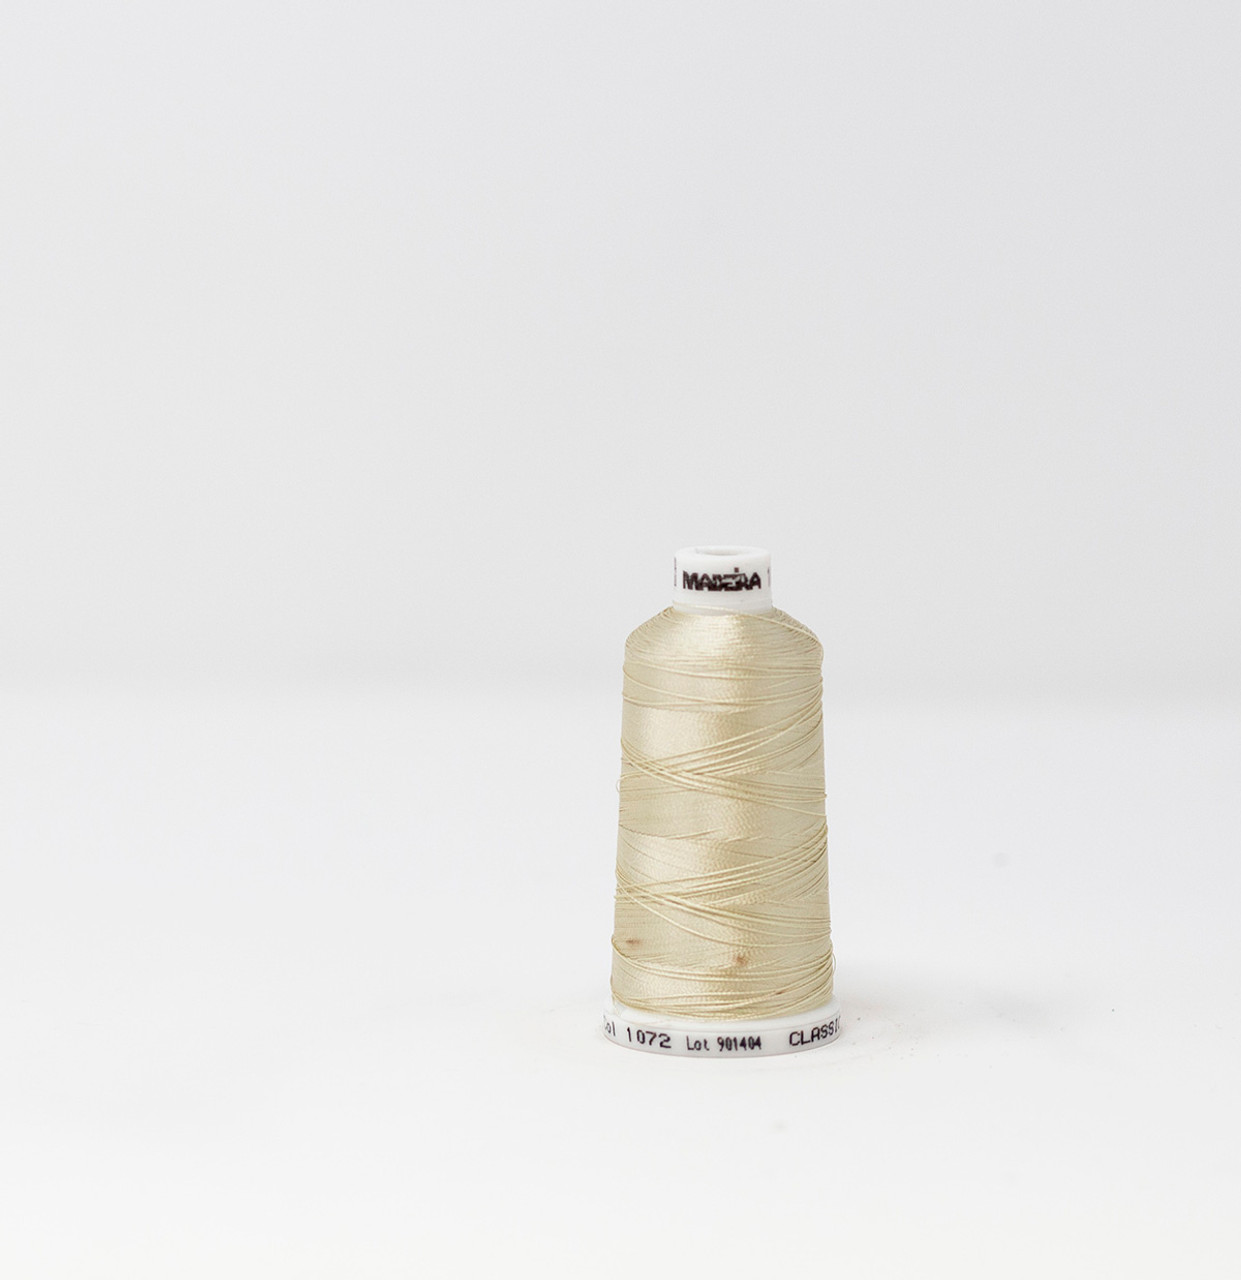 Mantra MS035 Silk String Shade Ivory Cream 190/300mm x 195mm